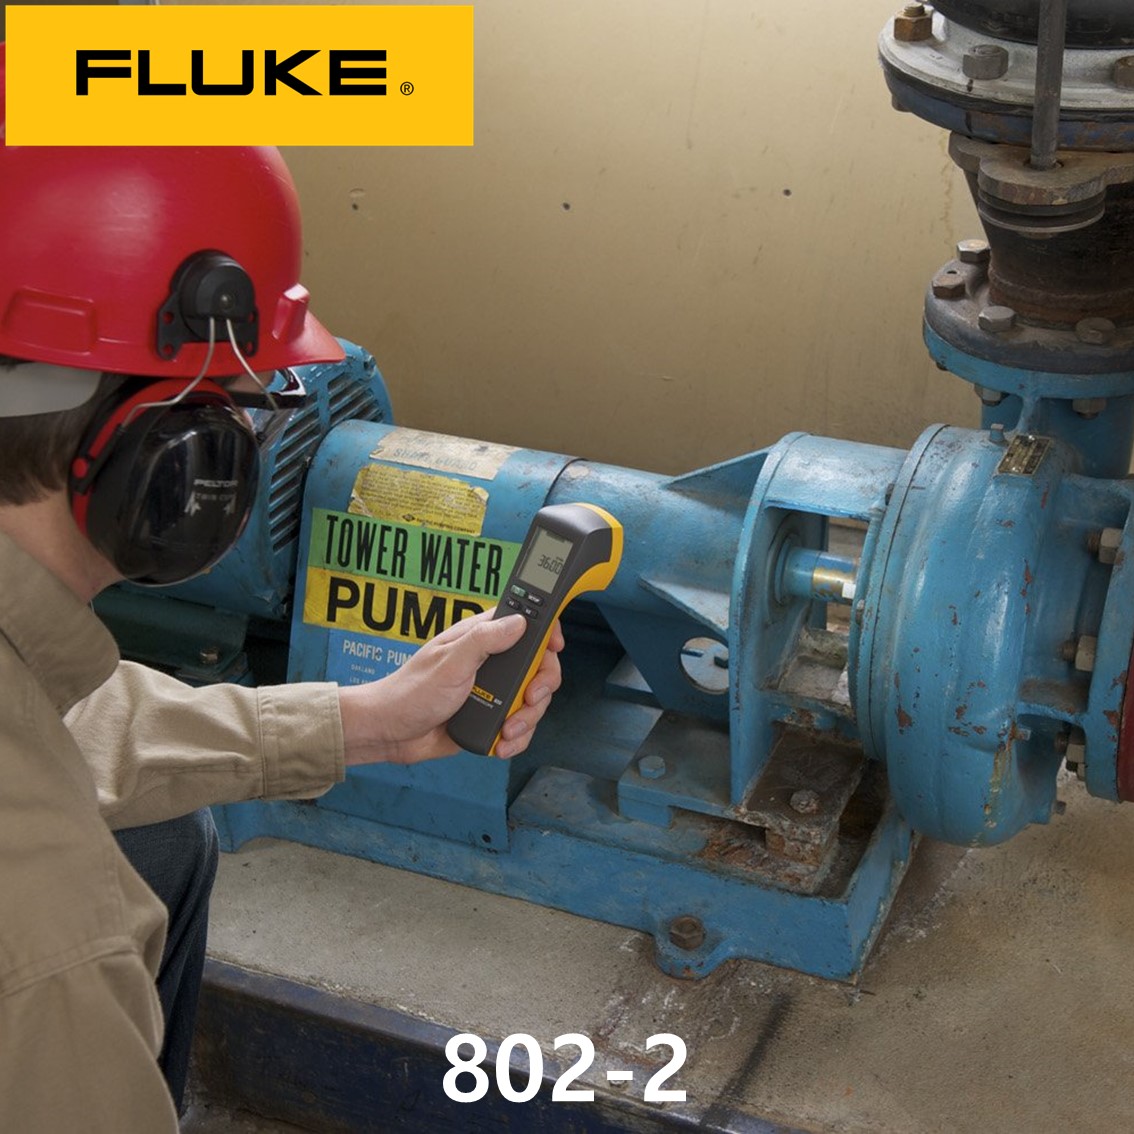 [ FLUKE 820 II ] 플루크 속도회전계 820-2, 스트로보스코프 820-2 (LED형)